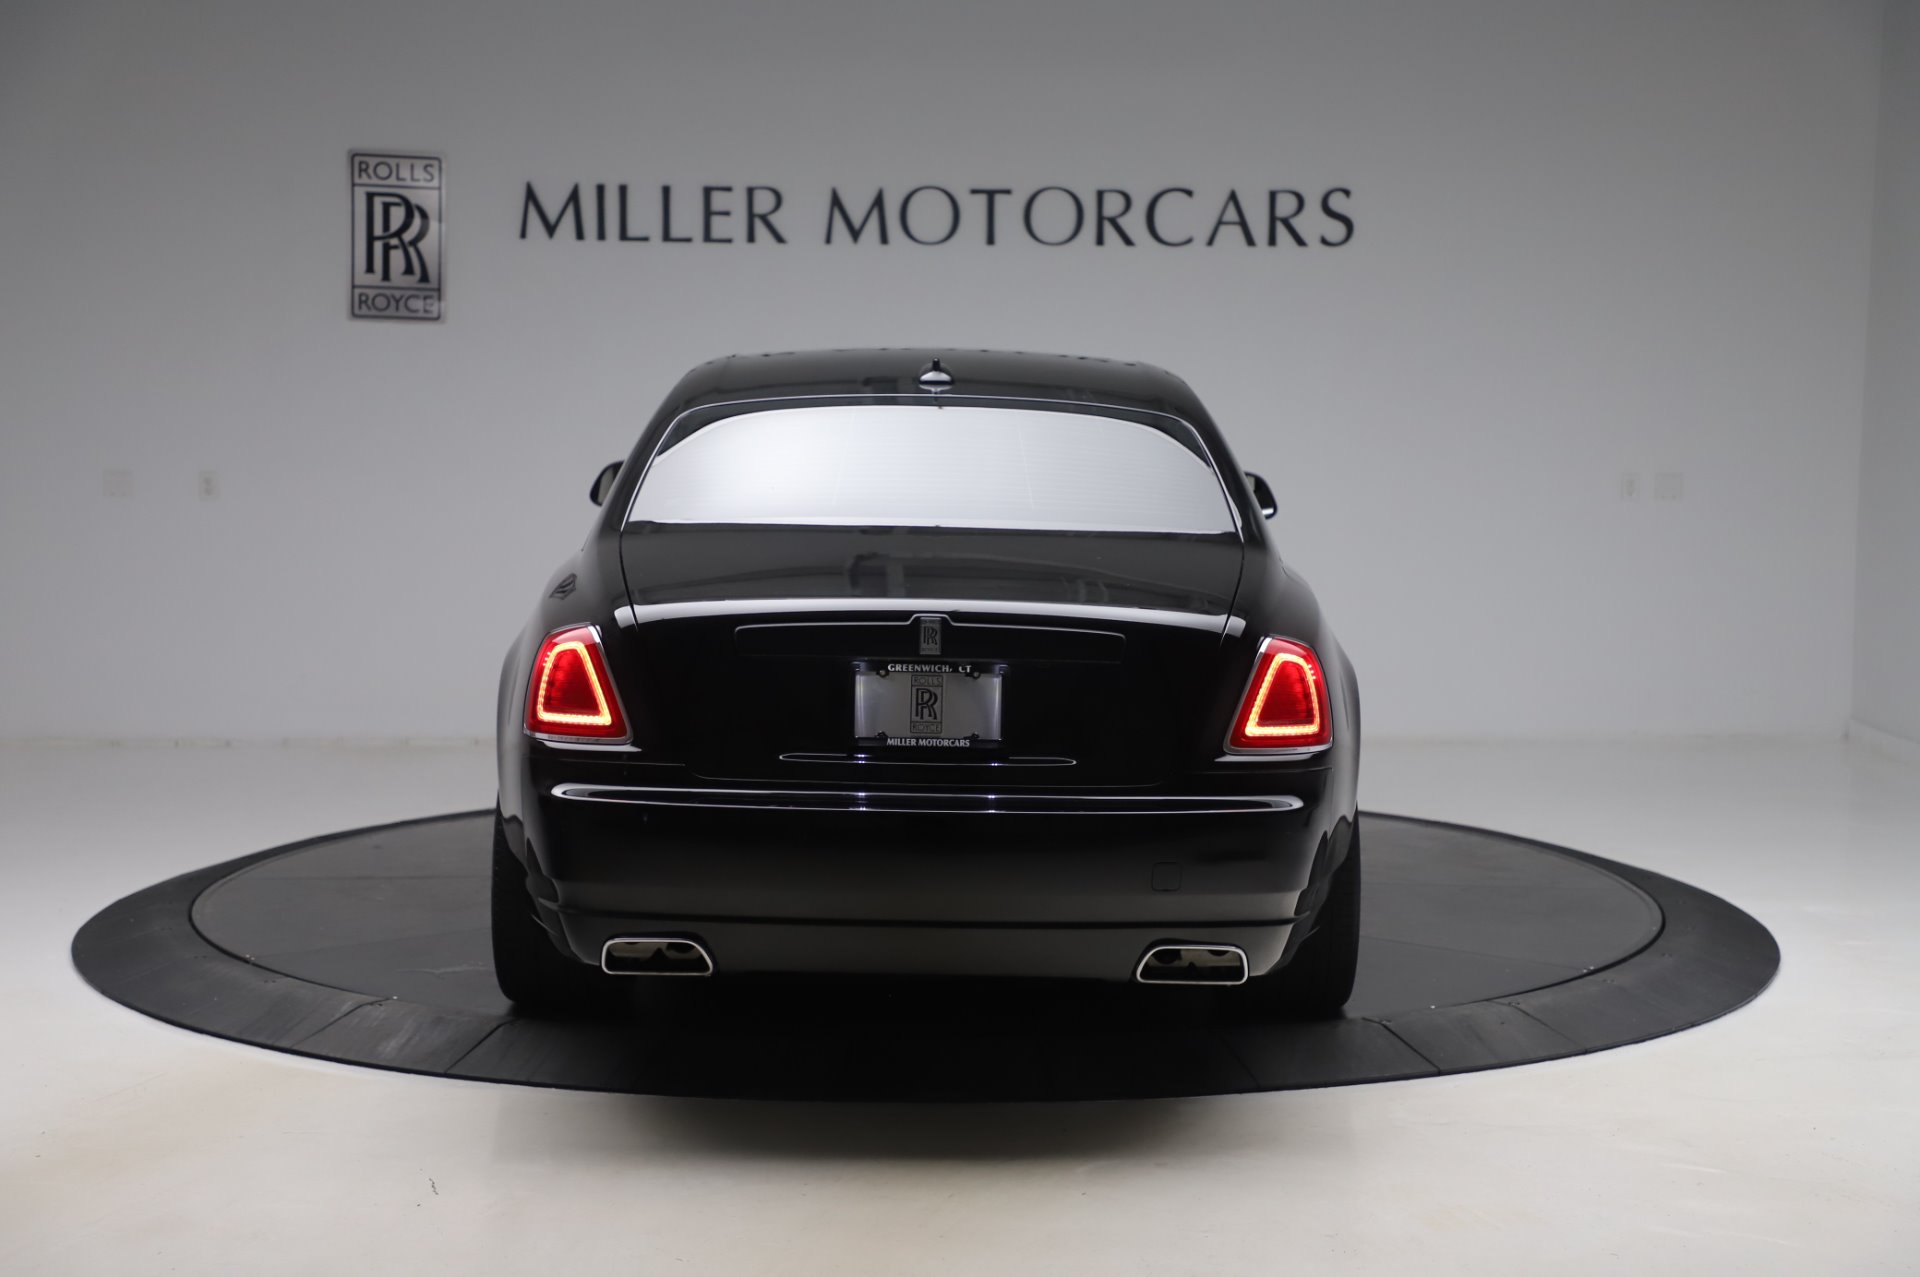 Rolls-Royce's new Ghost: Still plenty posh, but more laid back